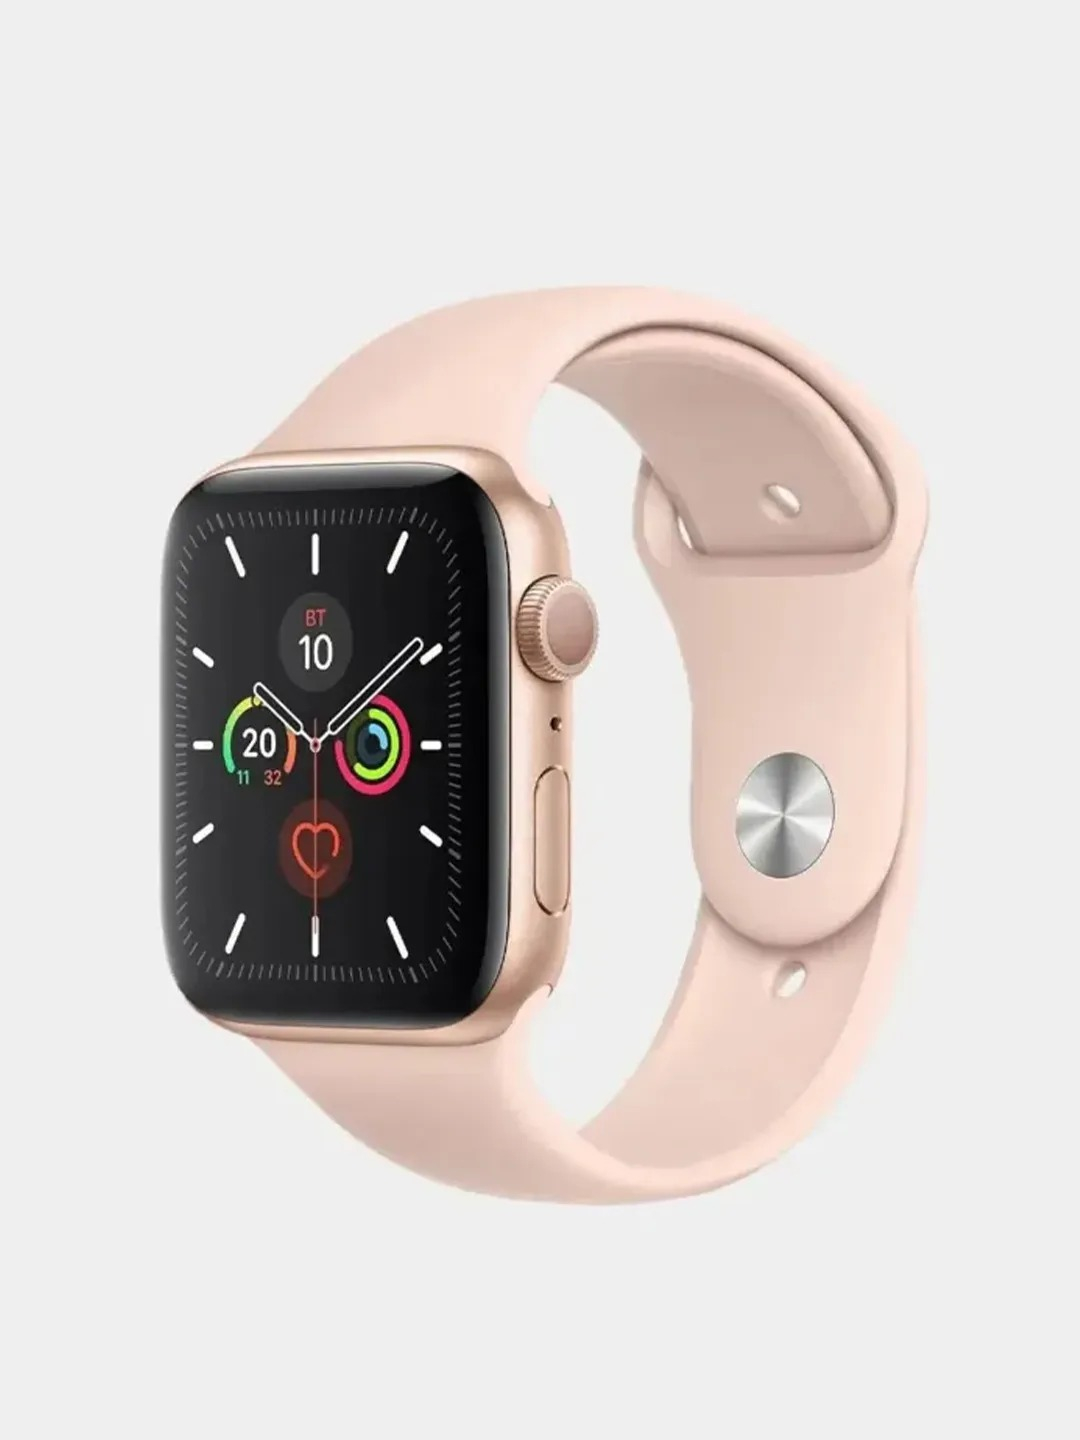 Смарт часы для айфона купить. Apple watch se 40mm Space Gray. Эпл вотч 7. Apple watch 4. Apple watch 7 45mm.